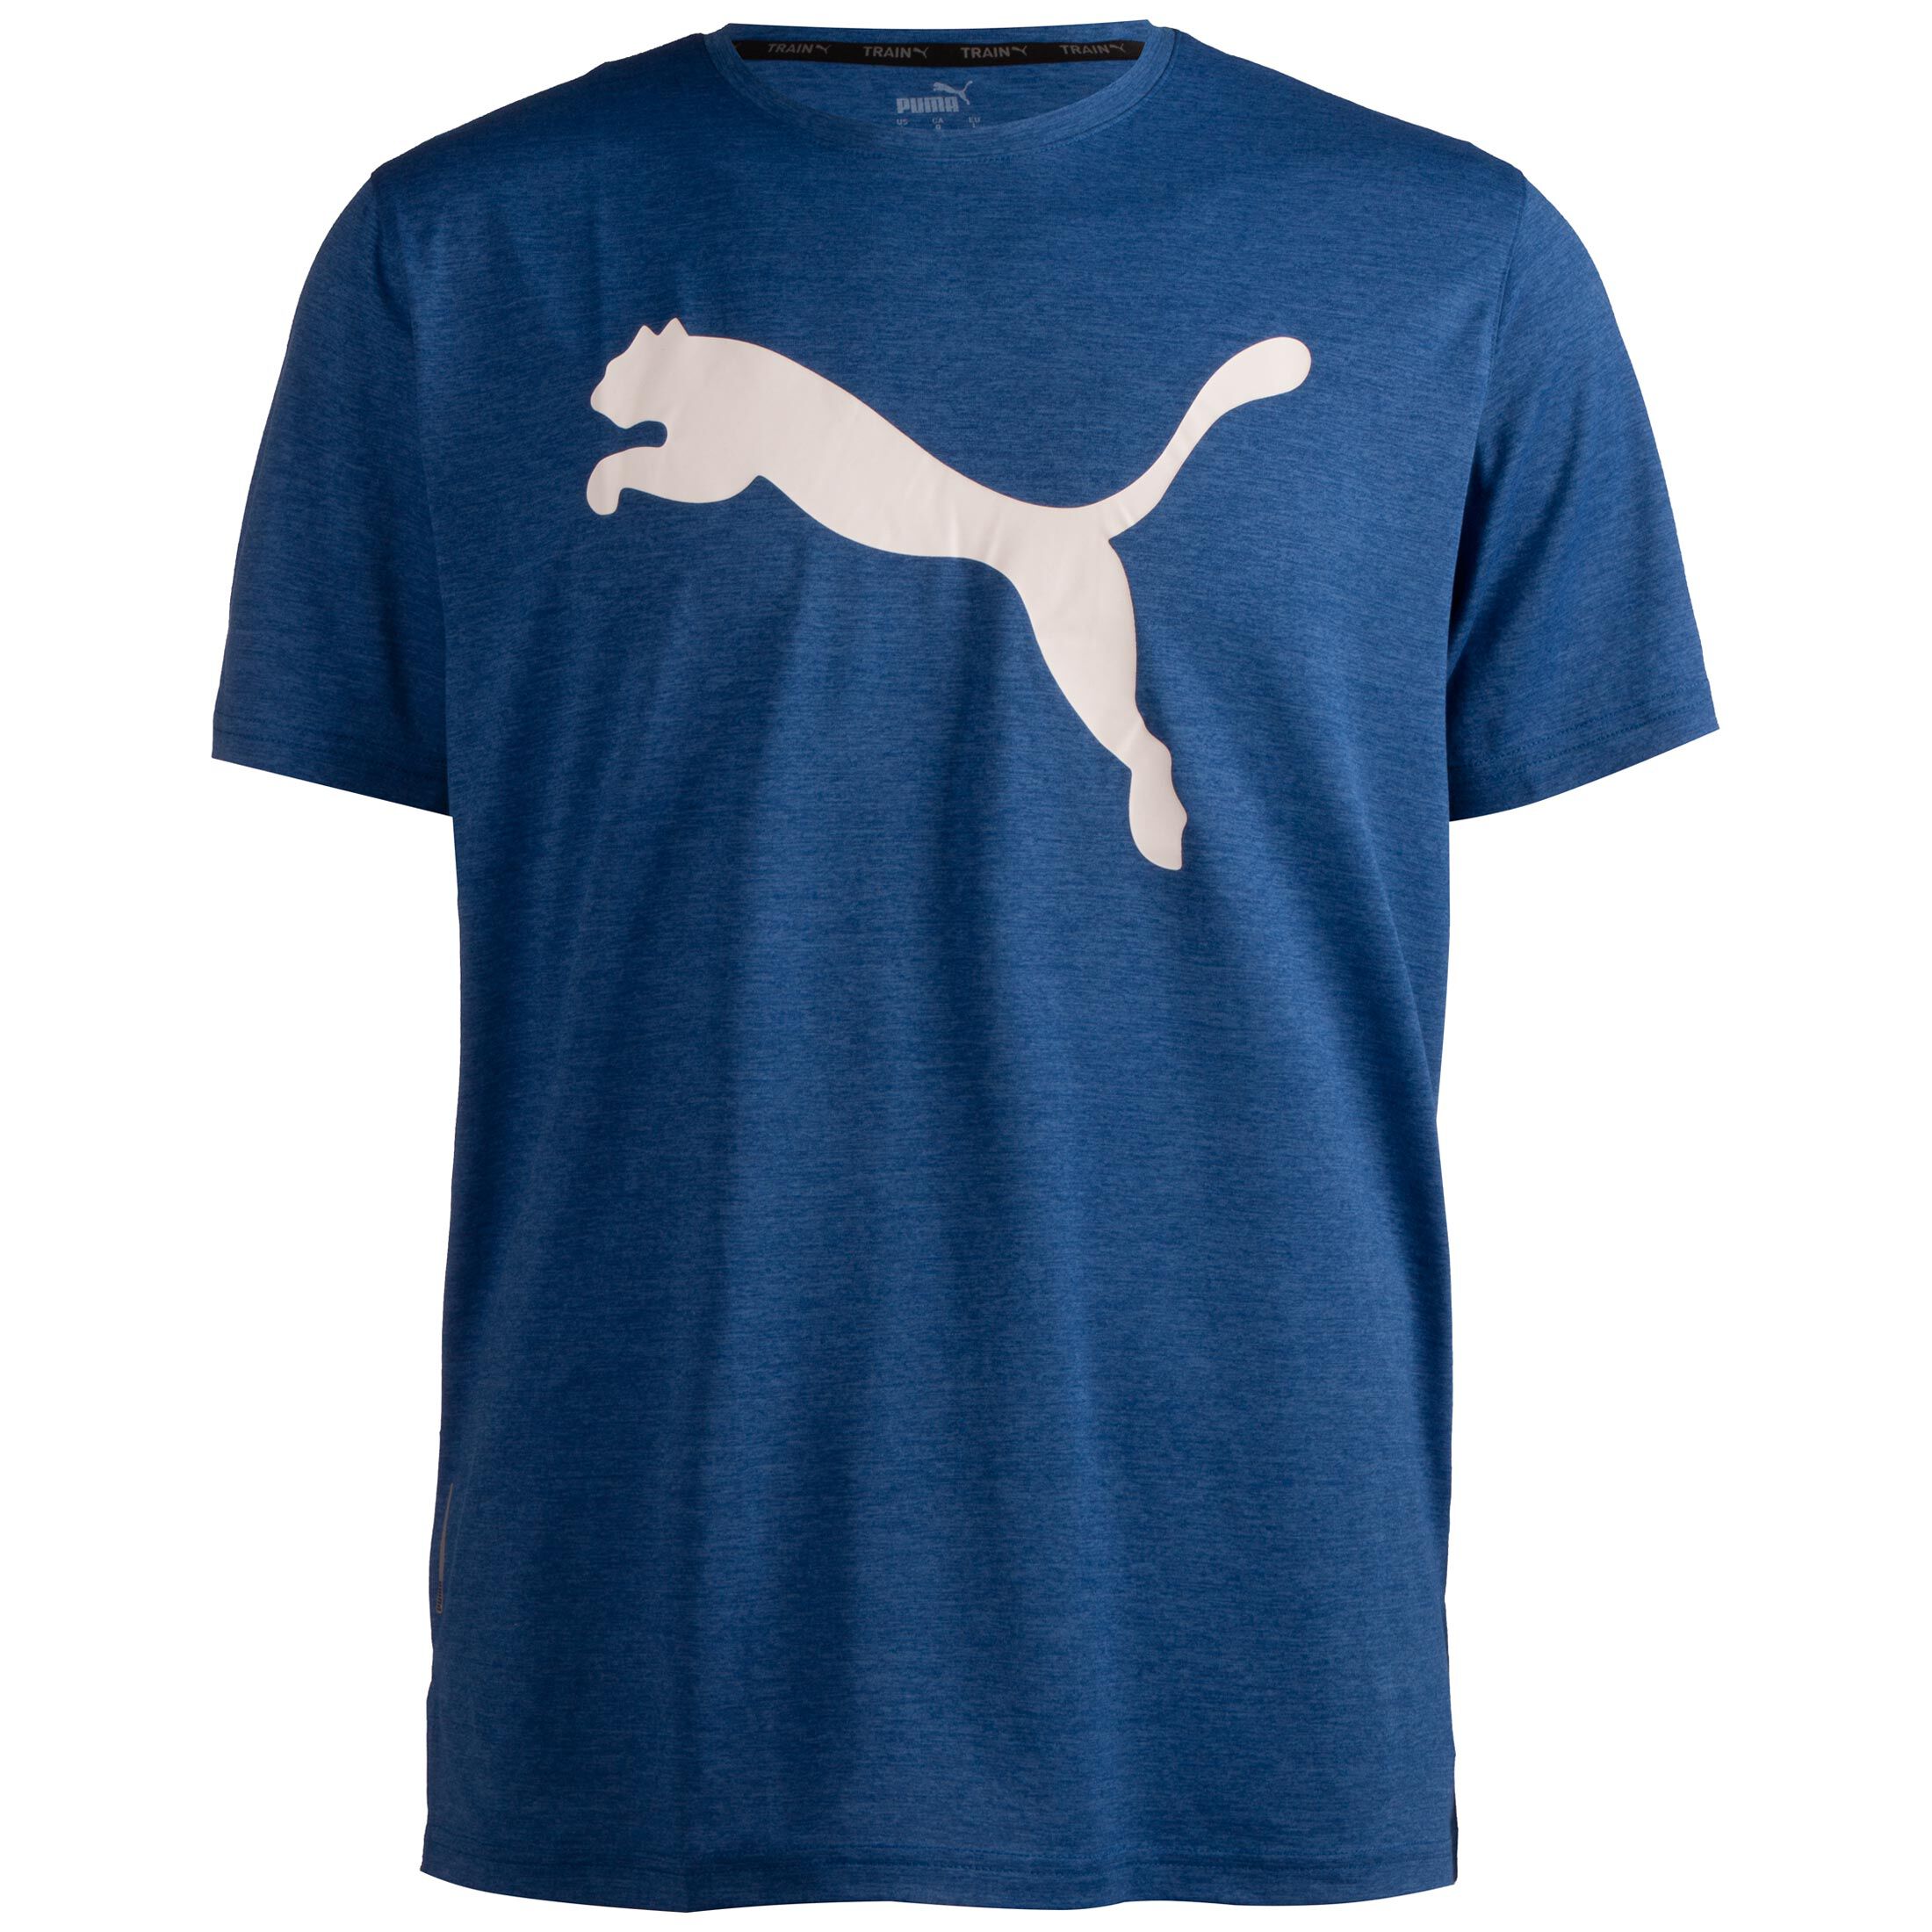 Рубашка Puma Trainingsshirt Train Favourite Heather Cat, синий футболка train fav heather cat puma светло синий